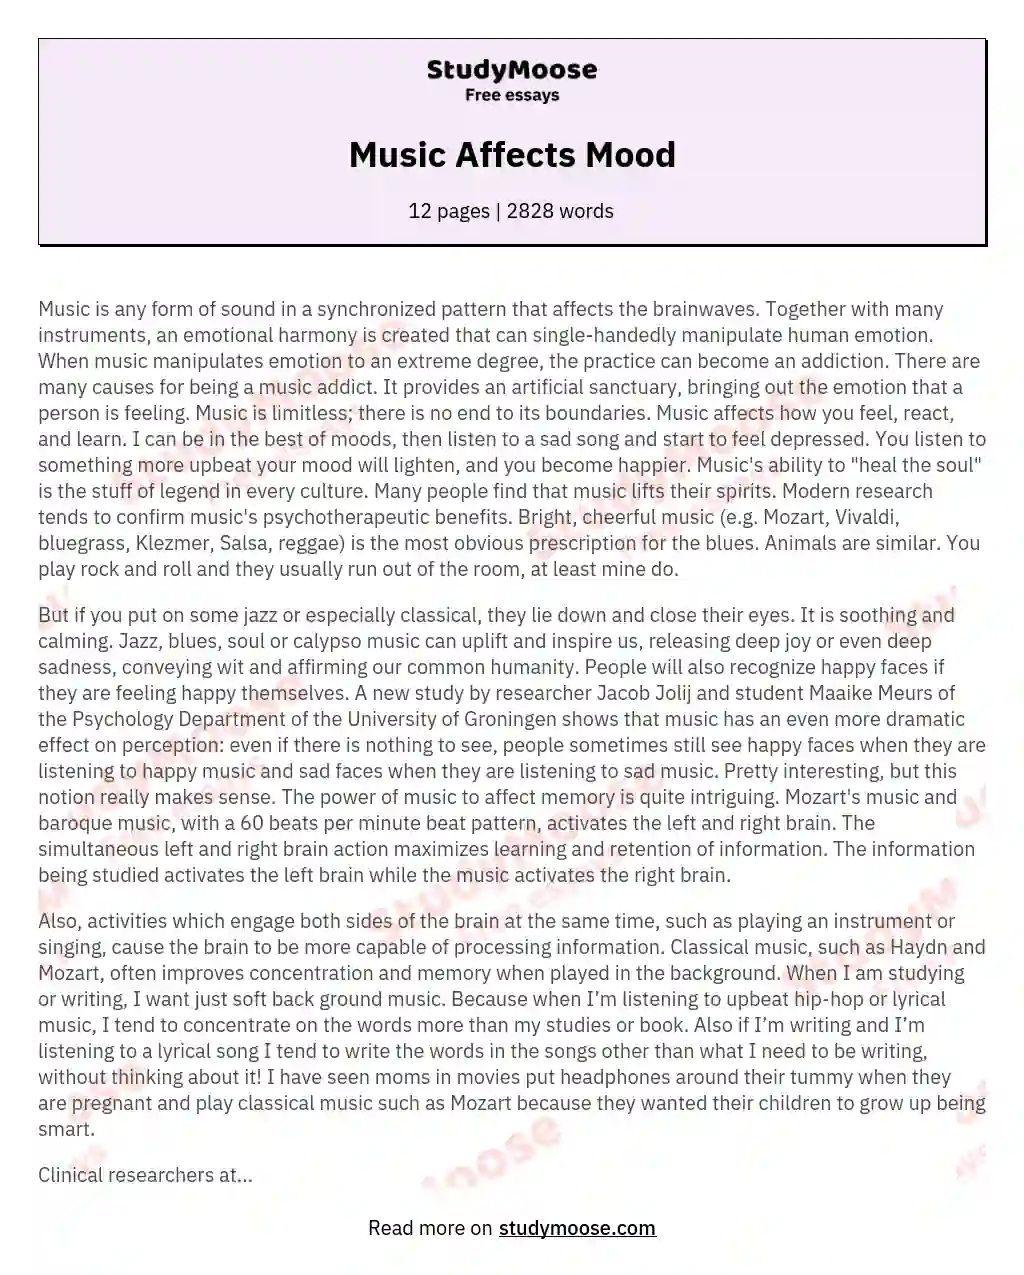 Music Affects Mood essay